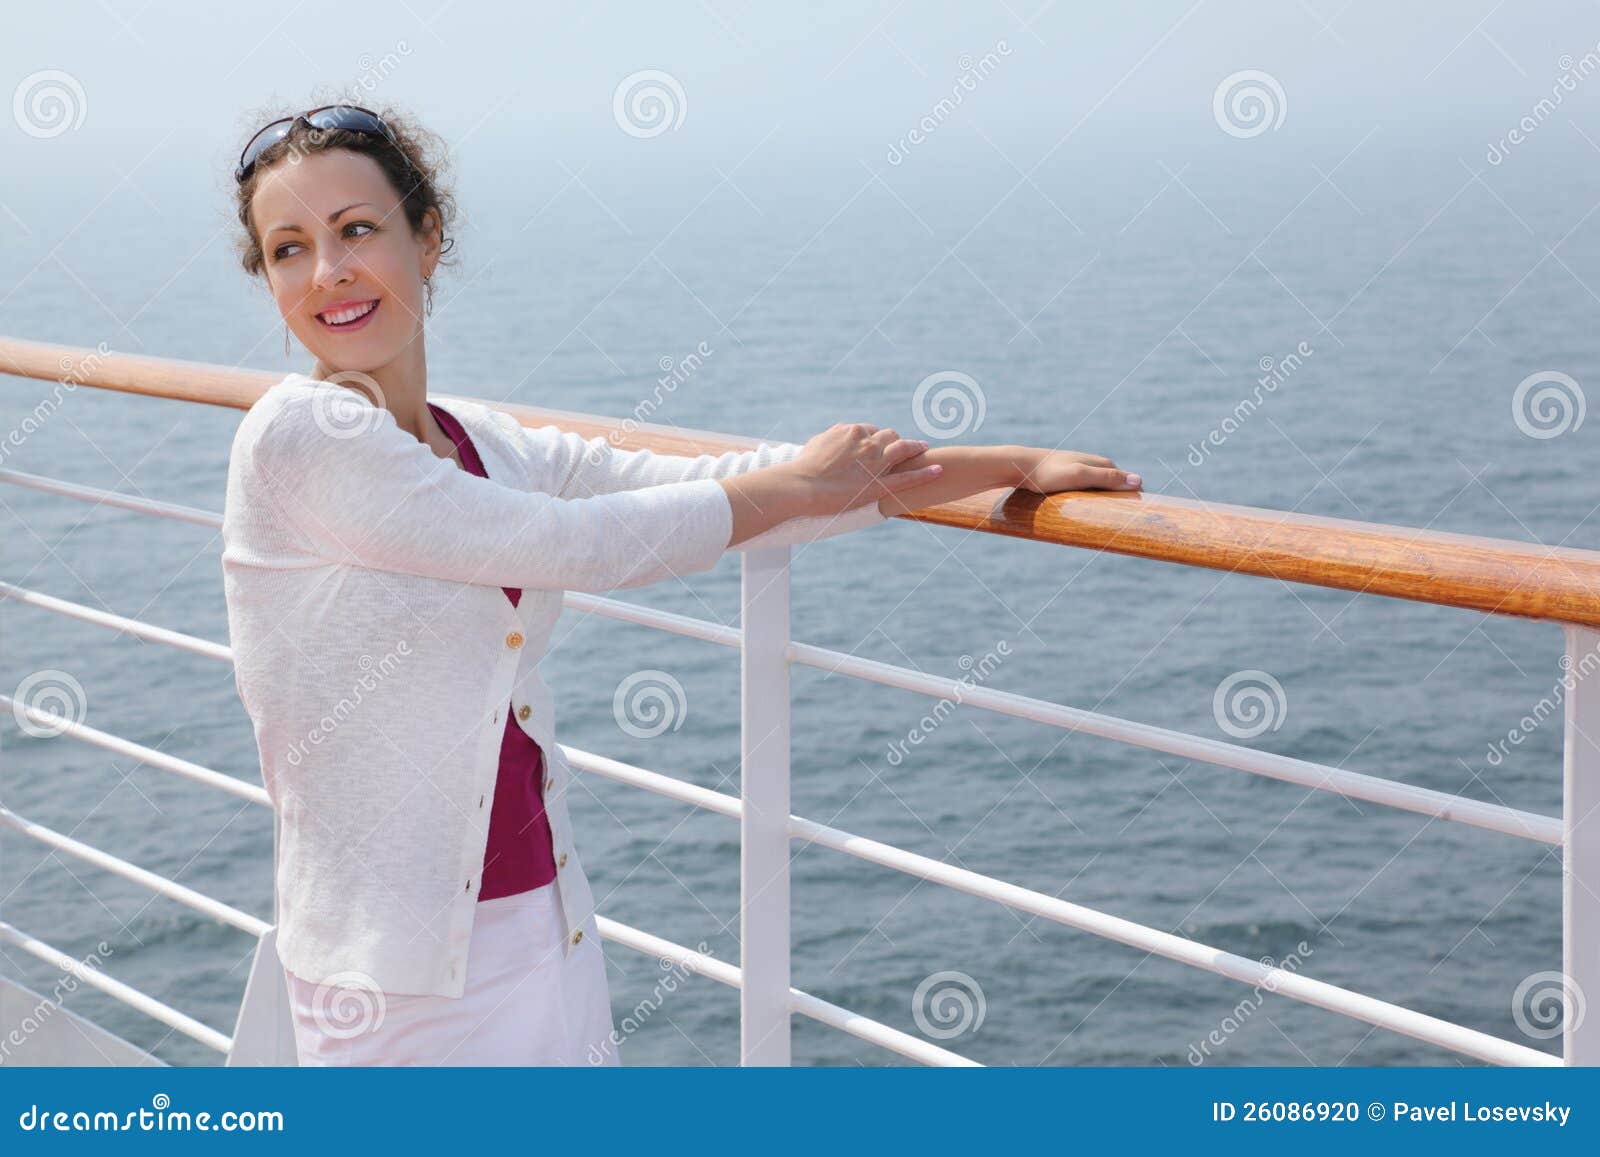 Лежа на палубе. Женщина на палубе корабля. Женщина на борту корабля. Дама на борту корабля. Женщина скромная на палубе корабля.